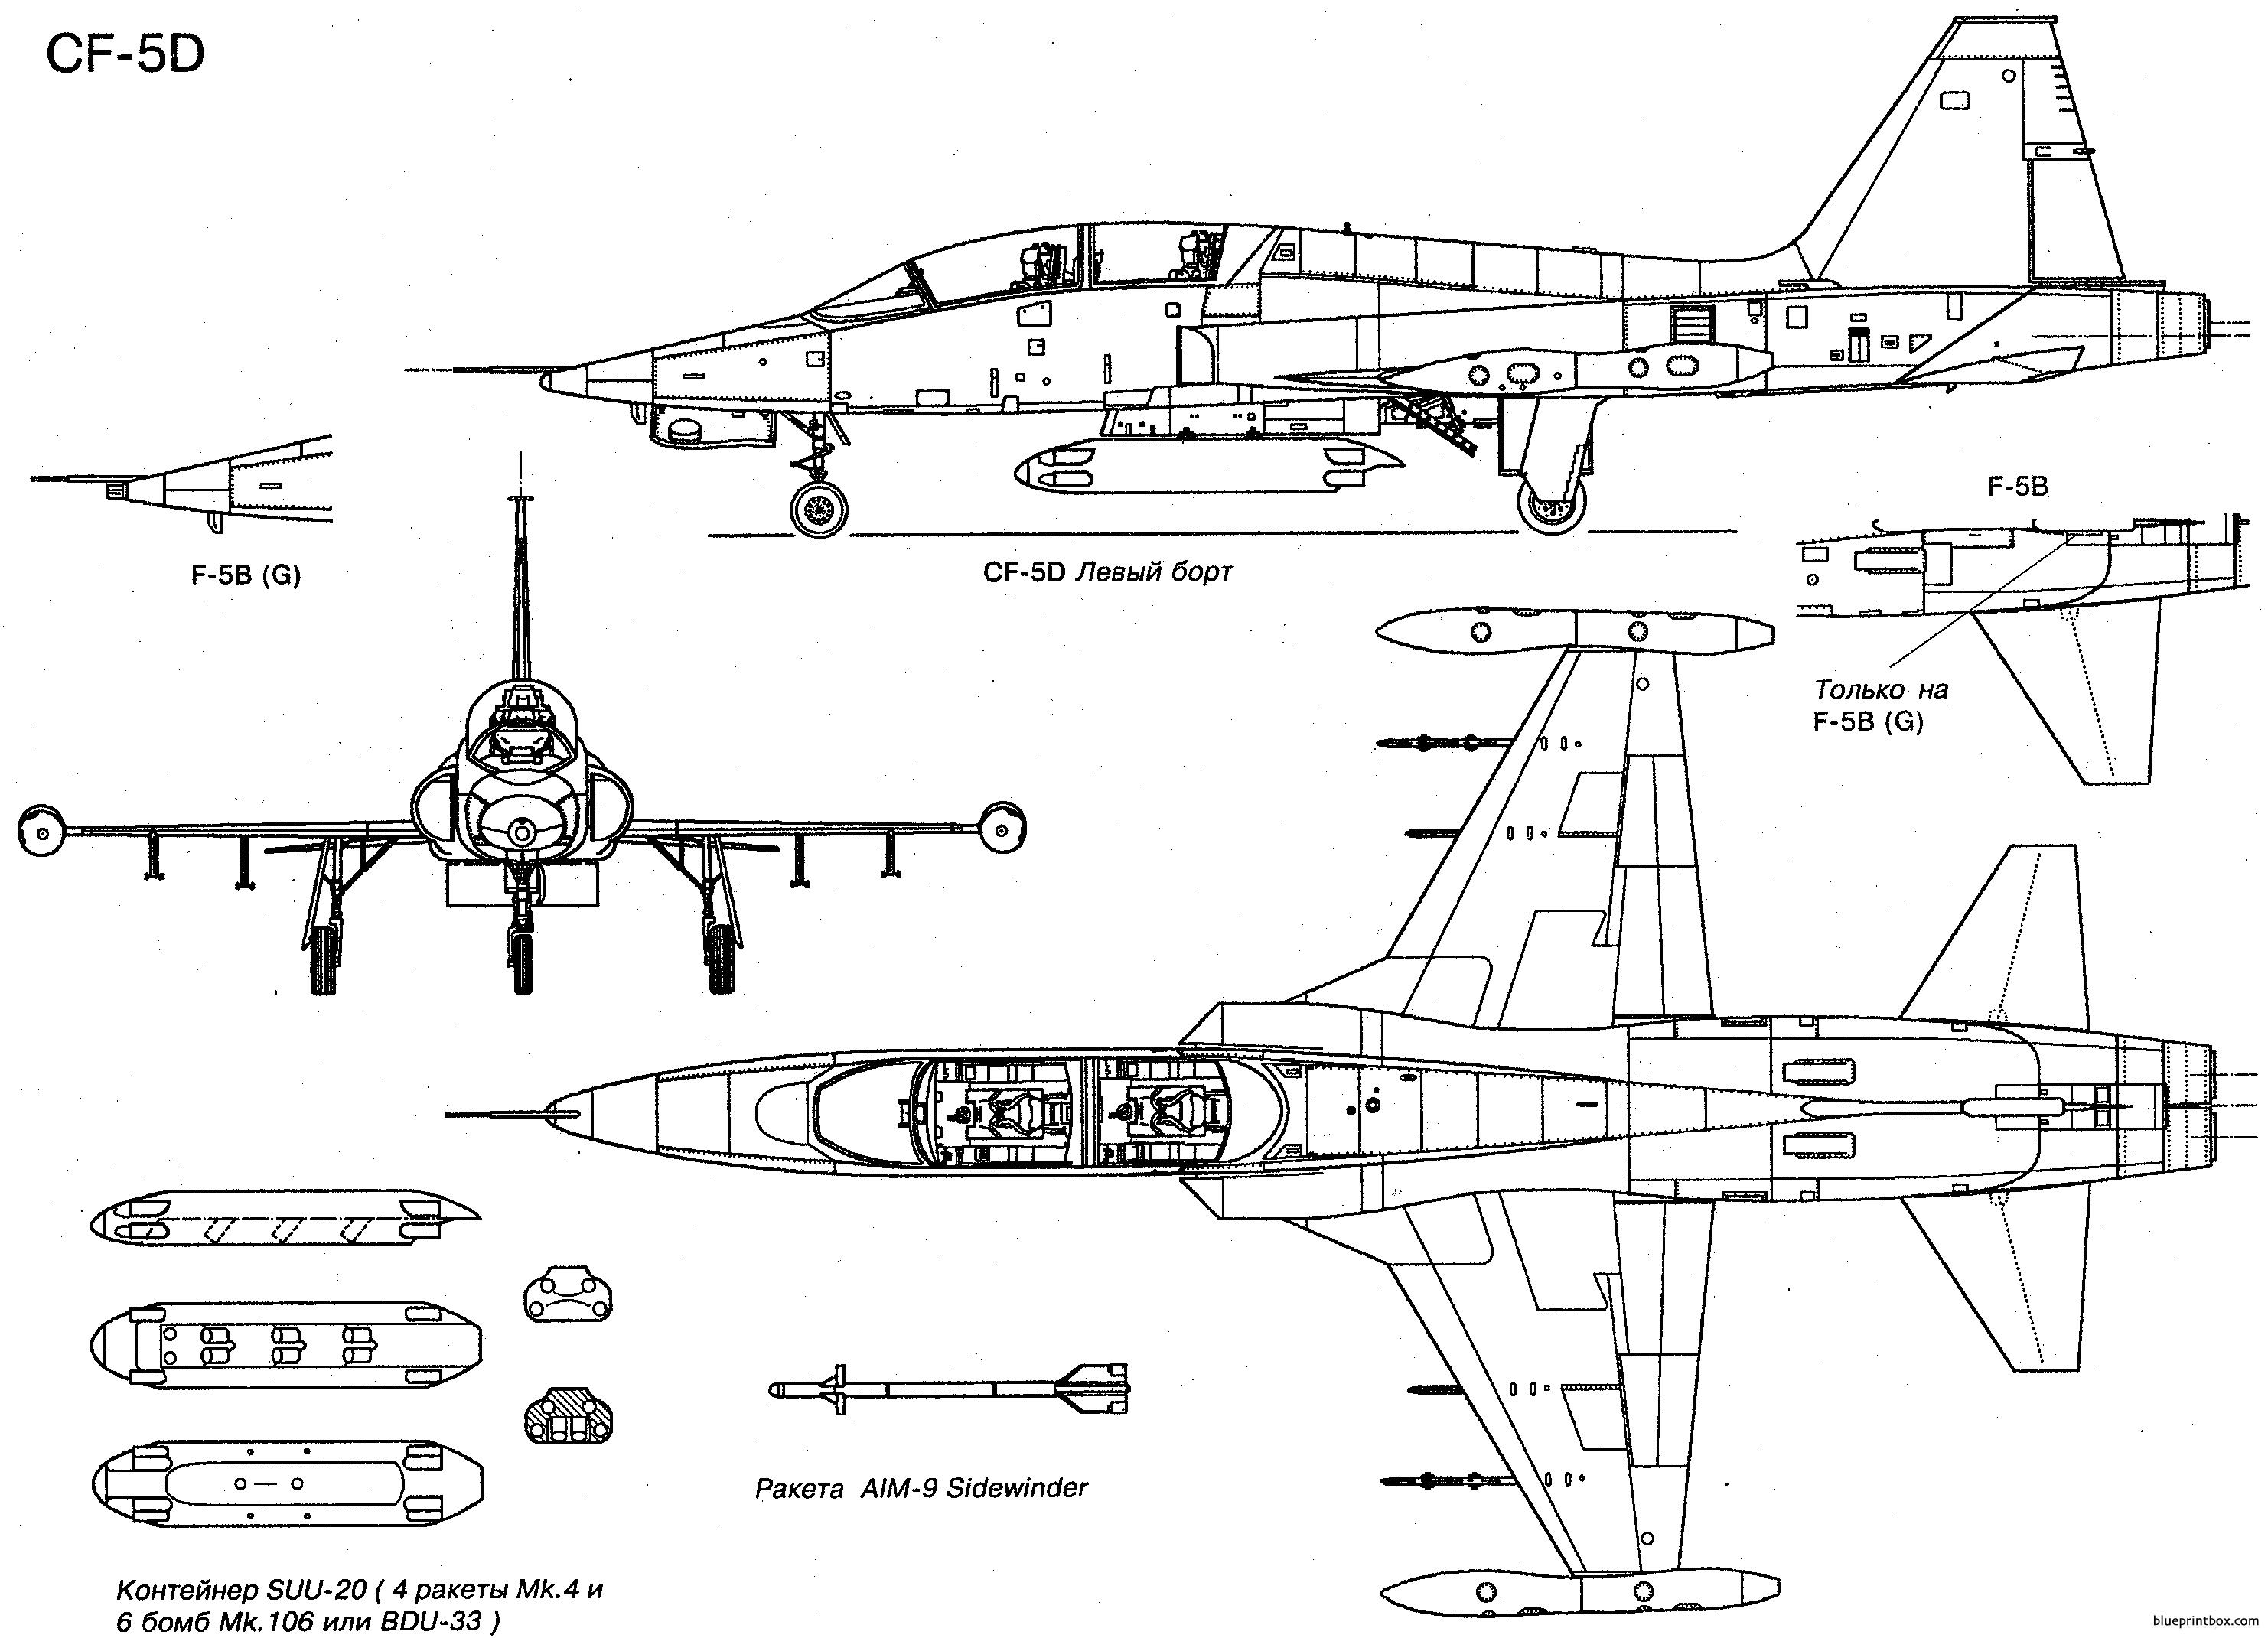 Fighter Jet Blueprint